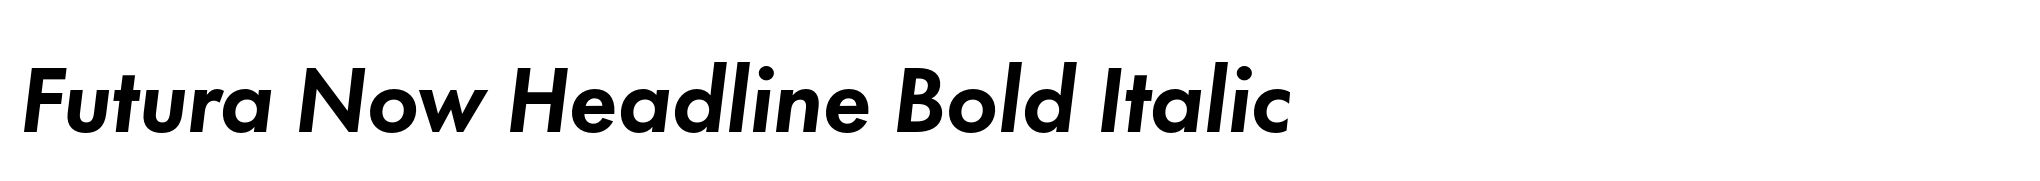 Futura Now Headline Bold Italic image